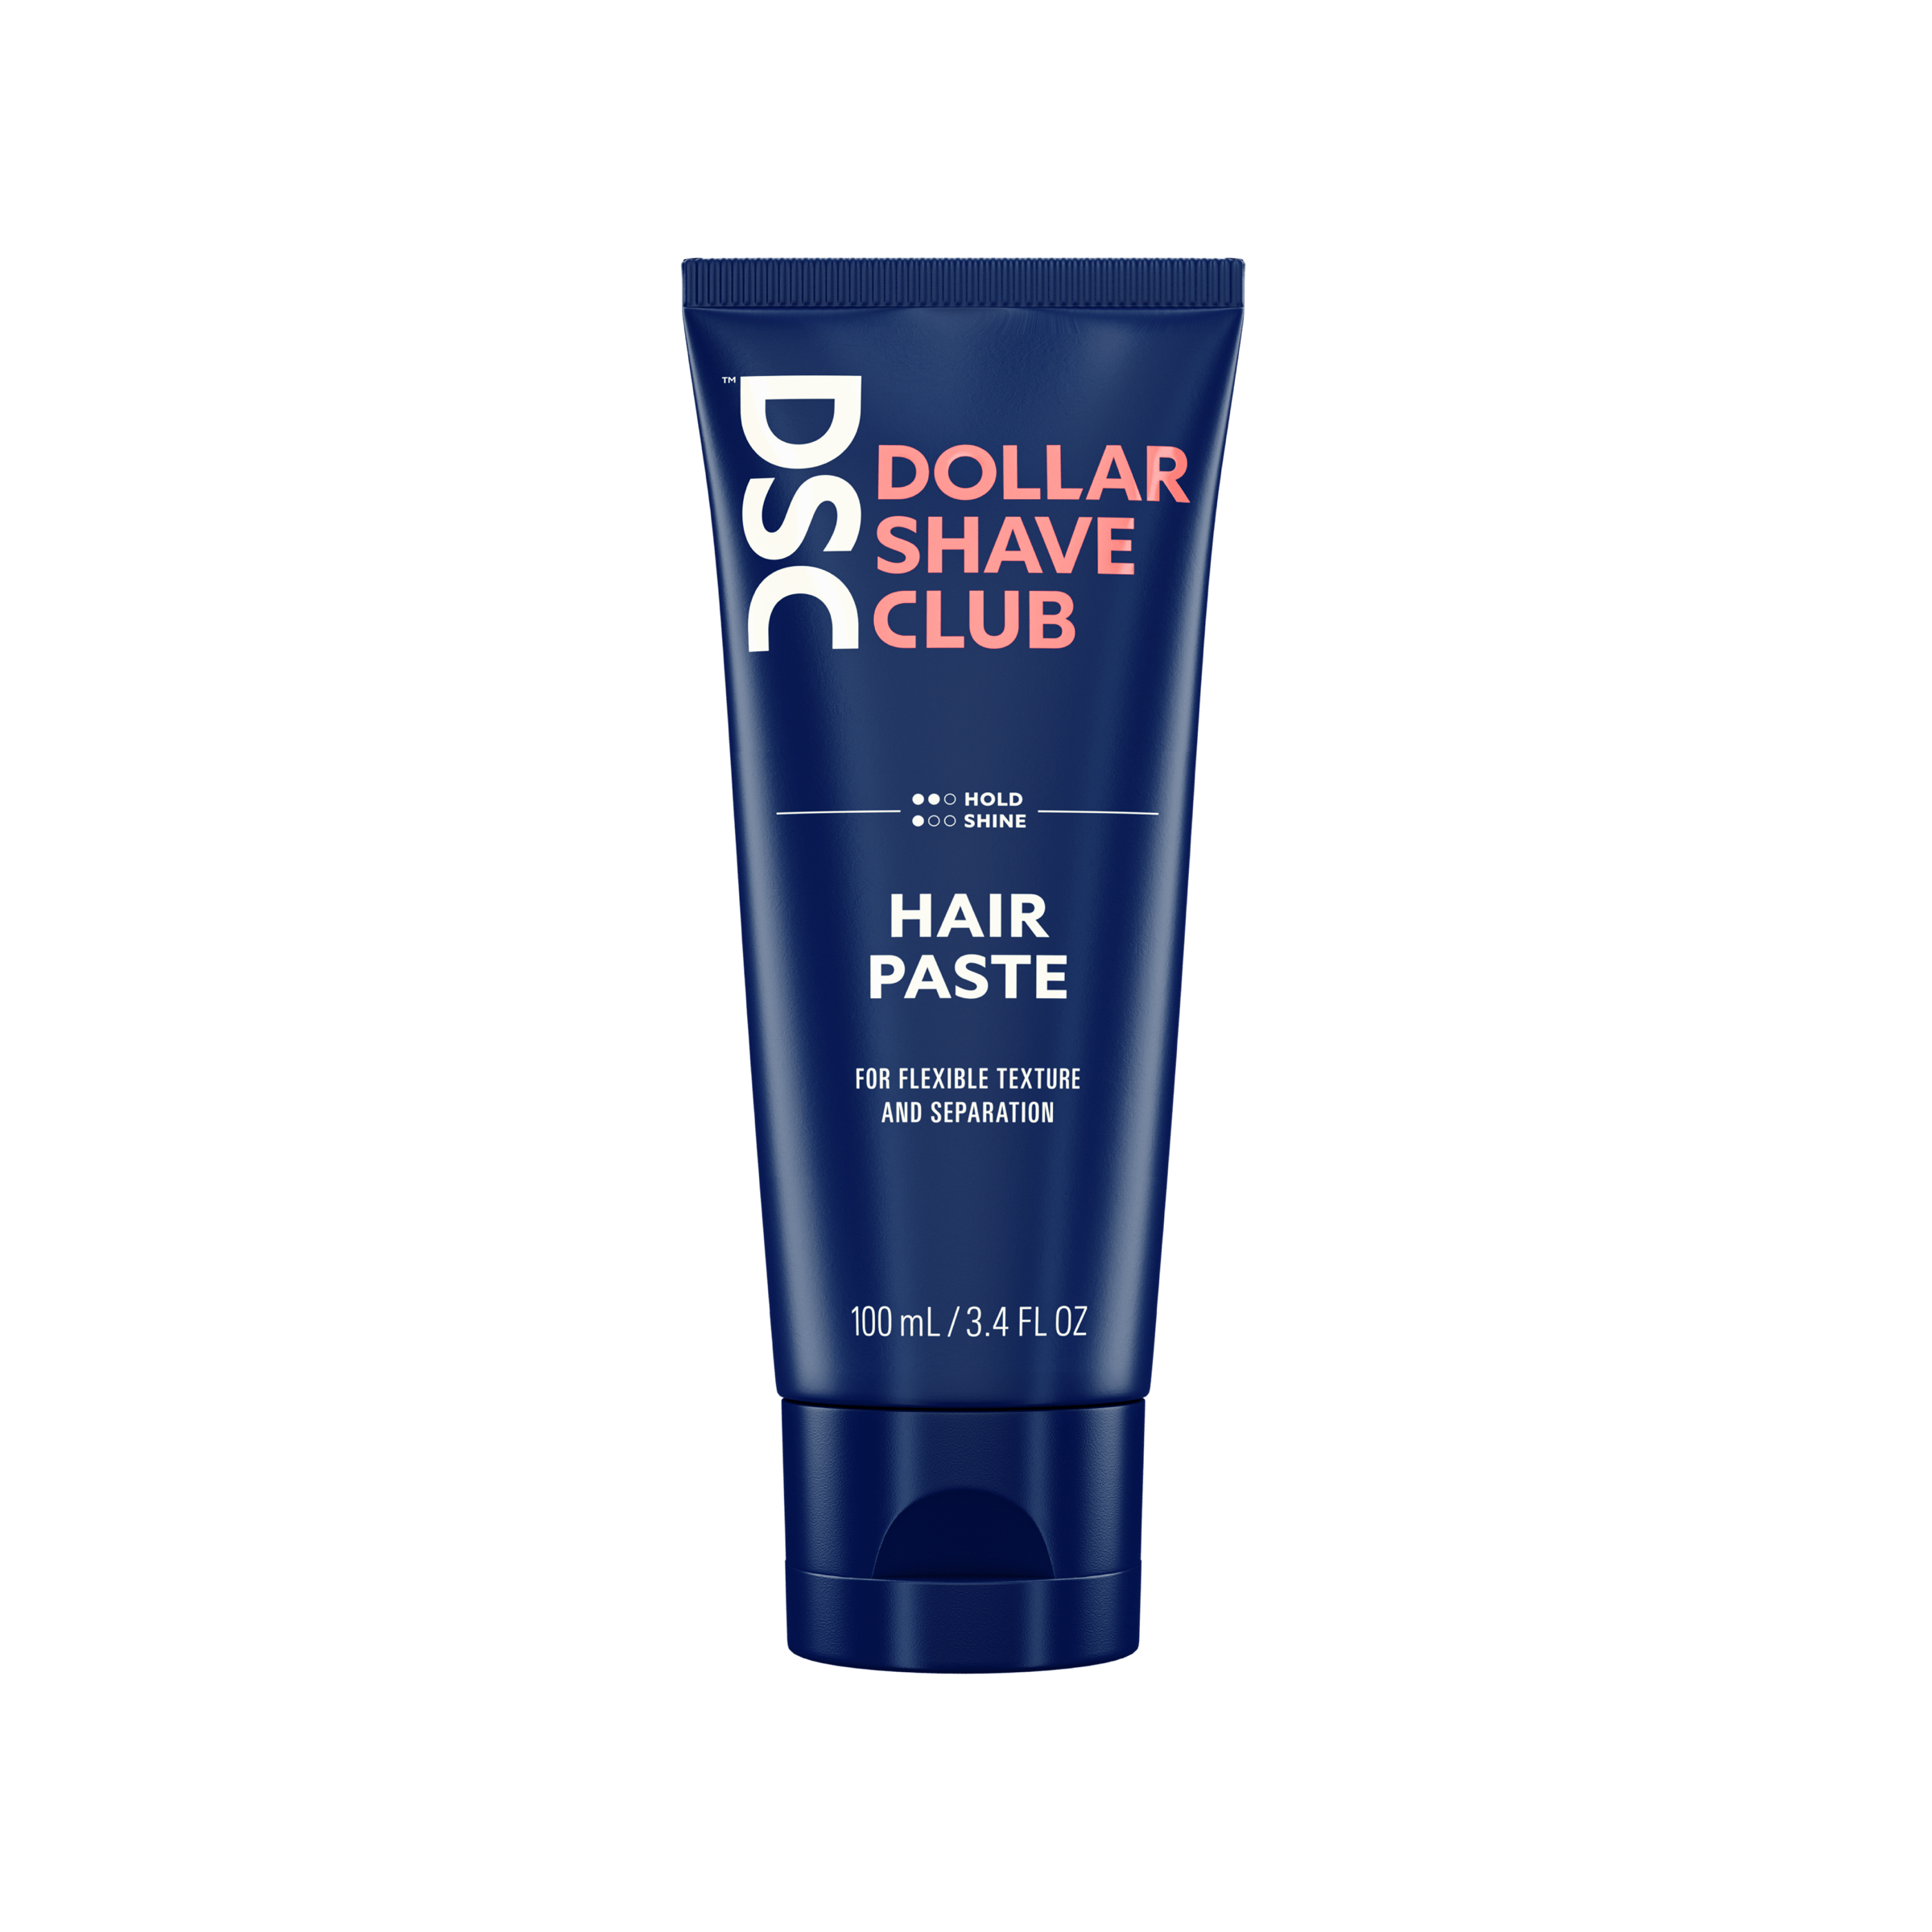 Dollar Shave Club Hair Paste against blank backdrop.